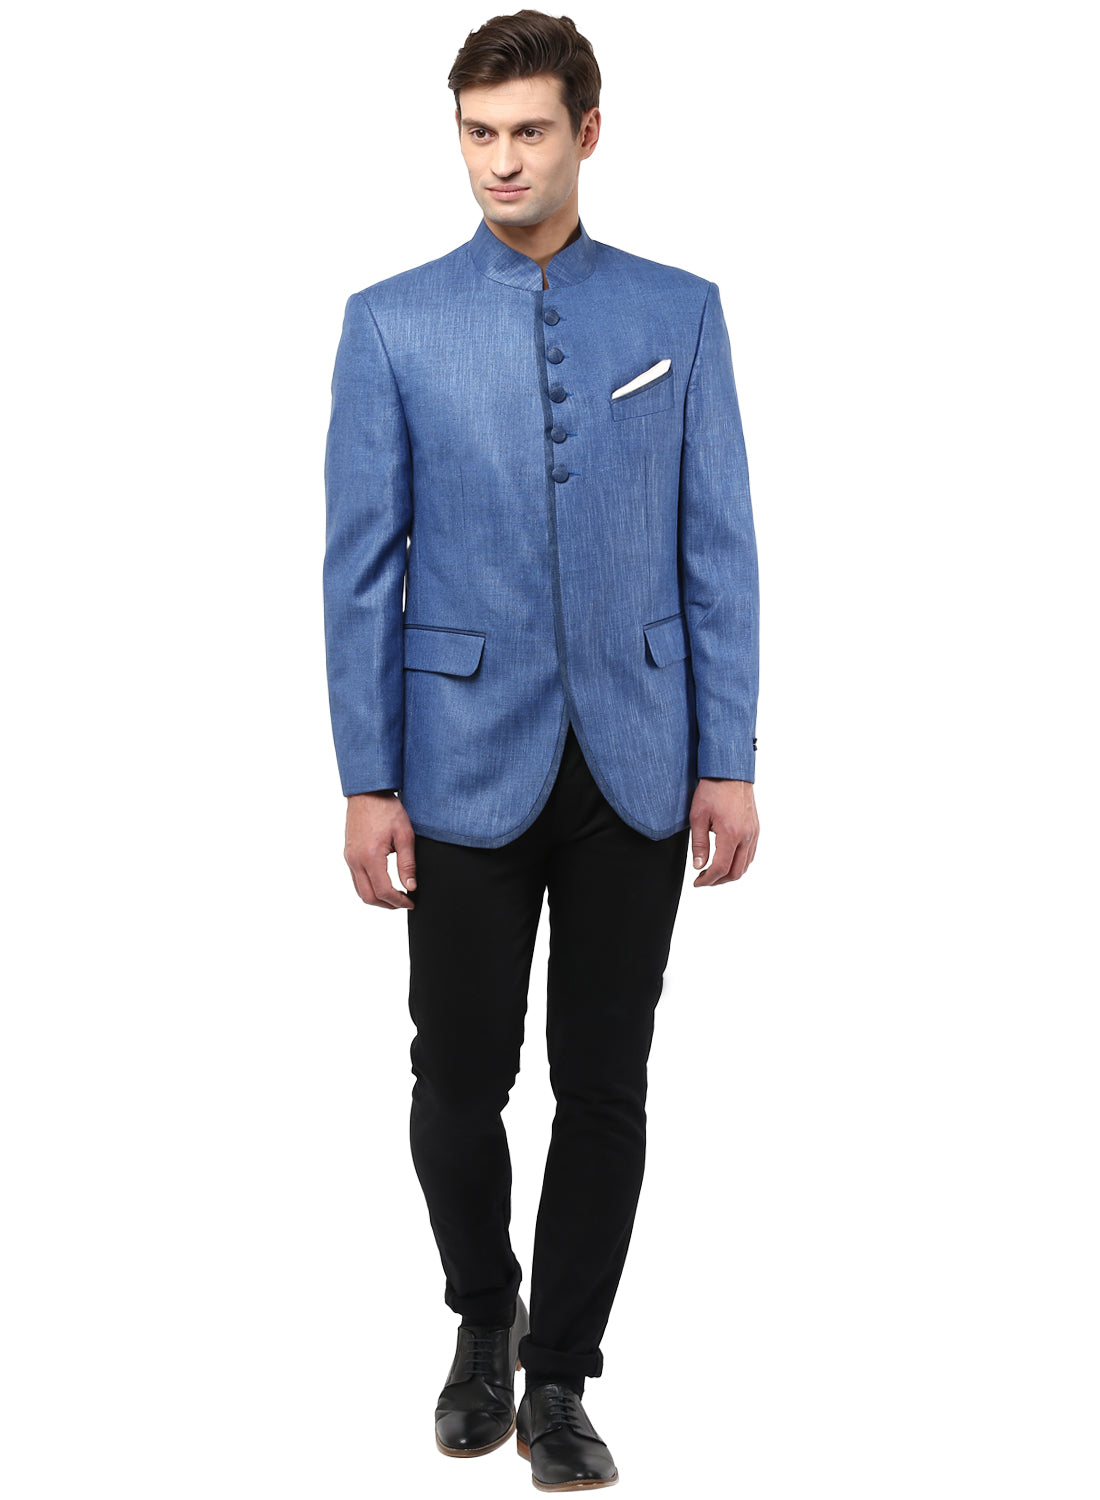 Blue 100% Linen Evening wear Bandhgala Jacket